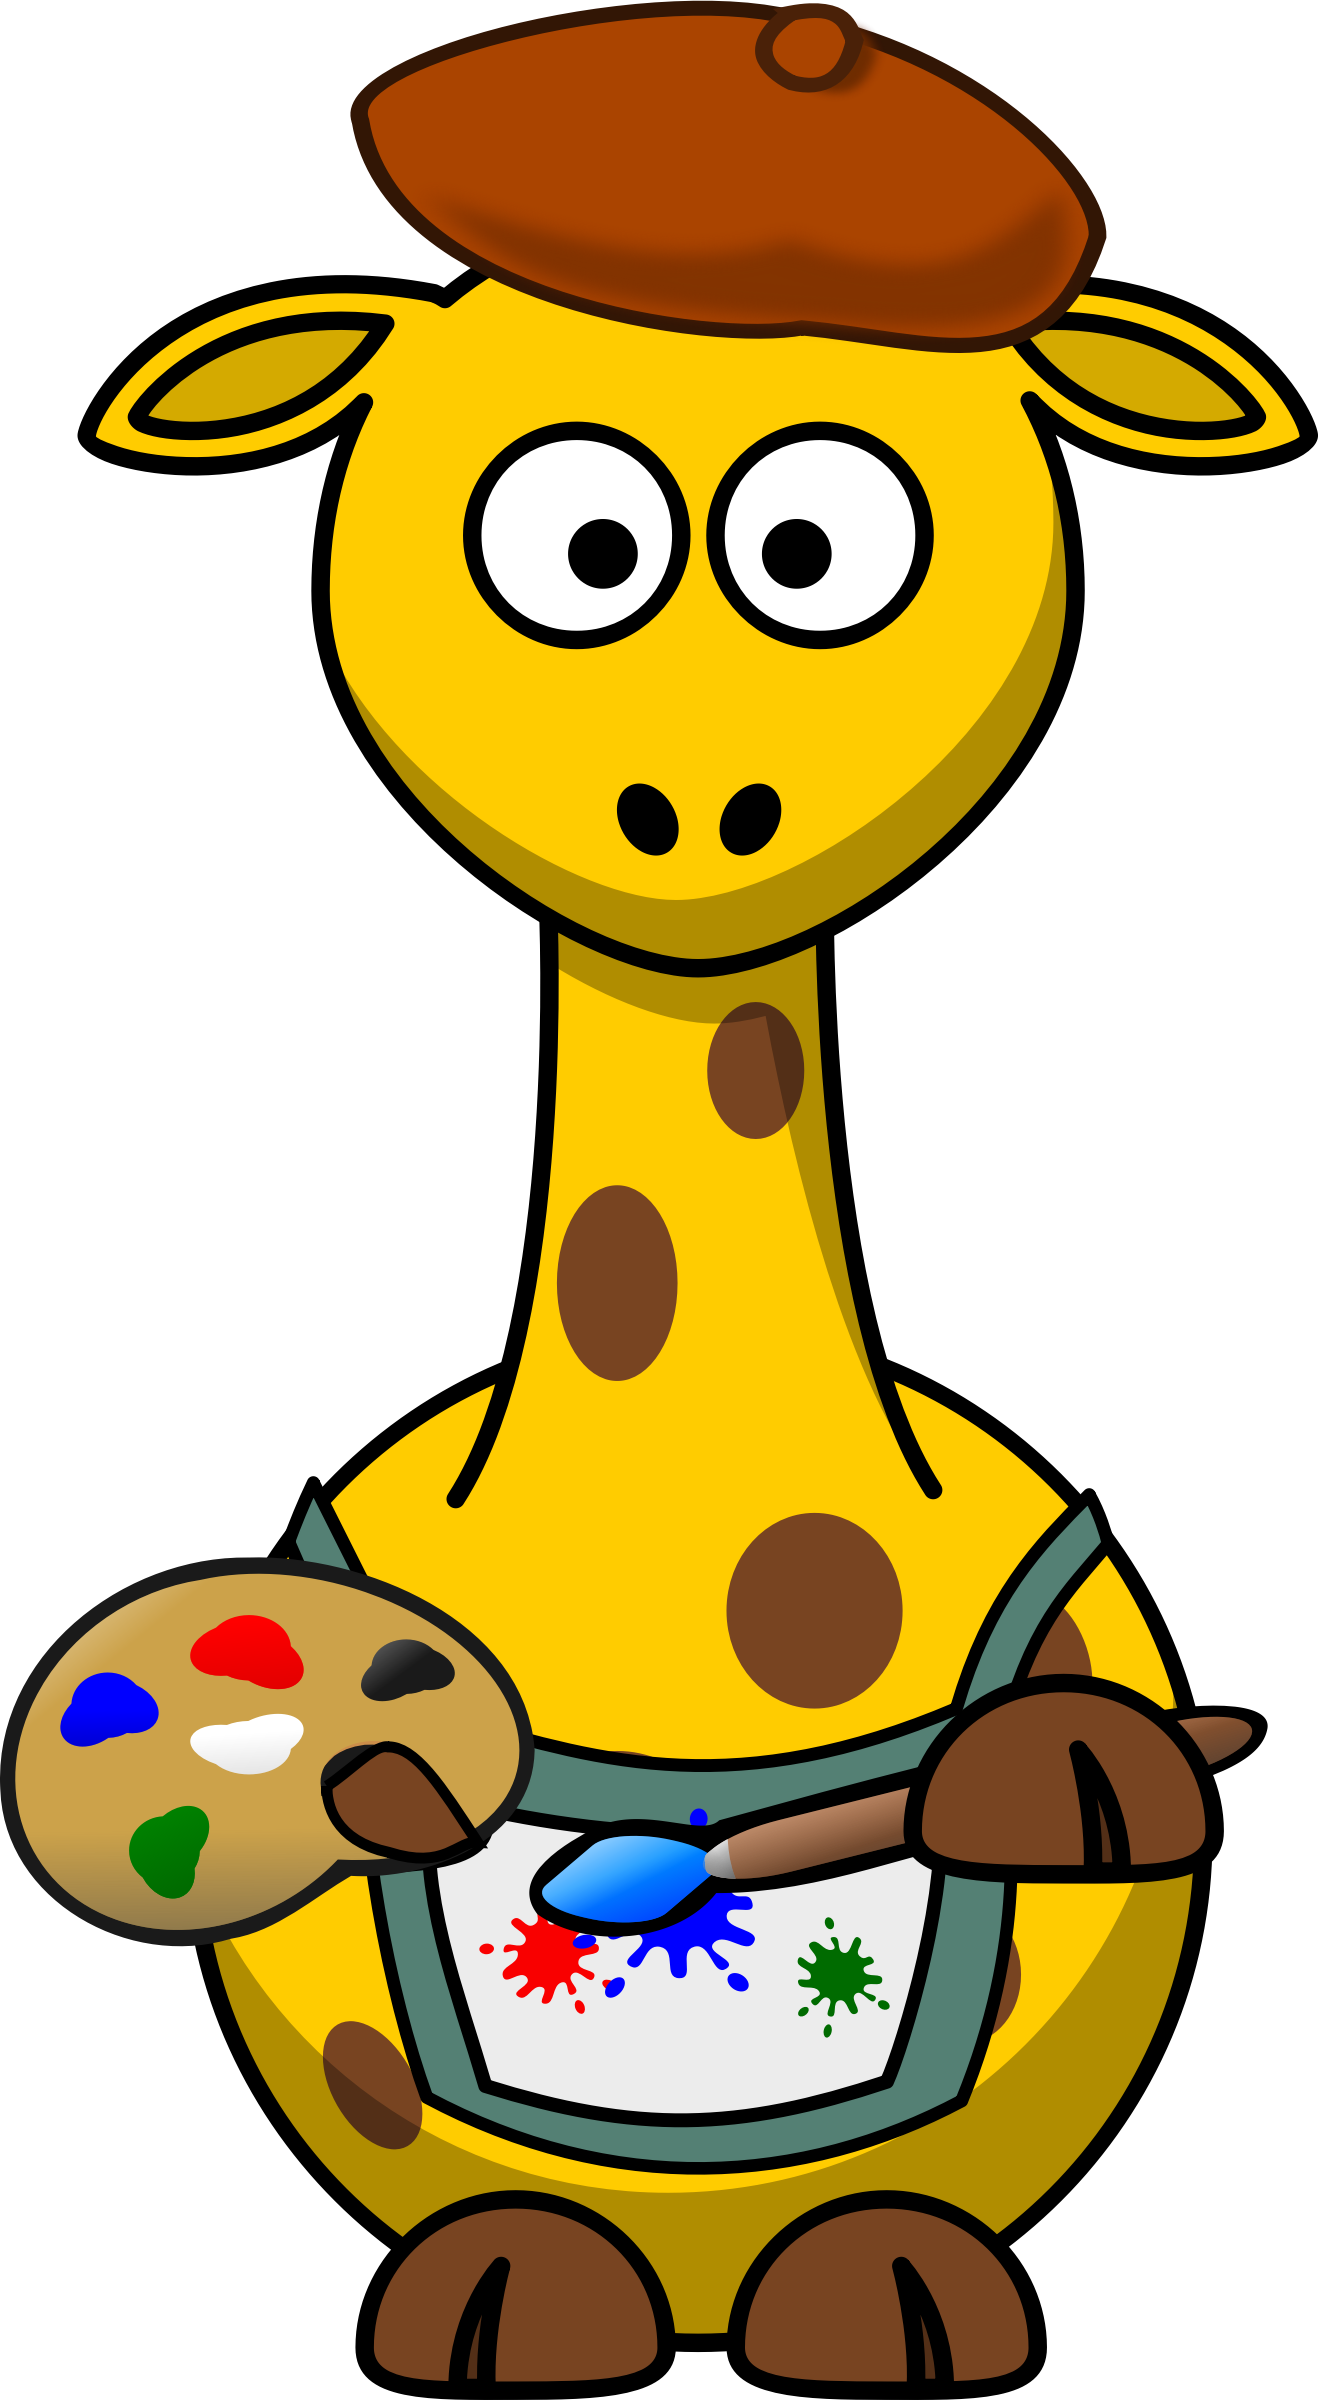 Giraffe big image png. Working clipart painter